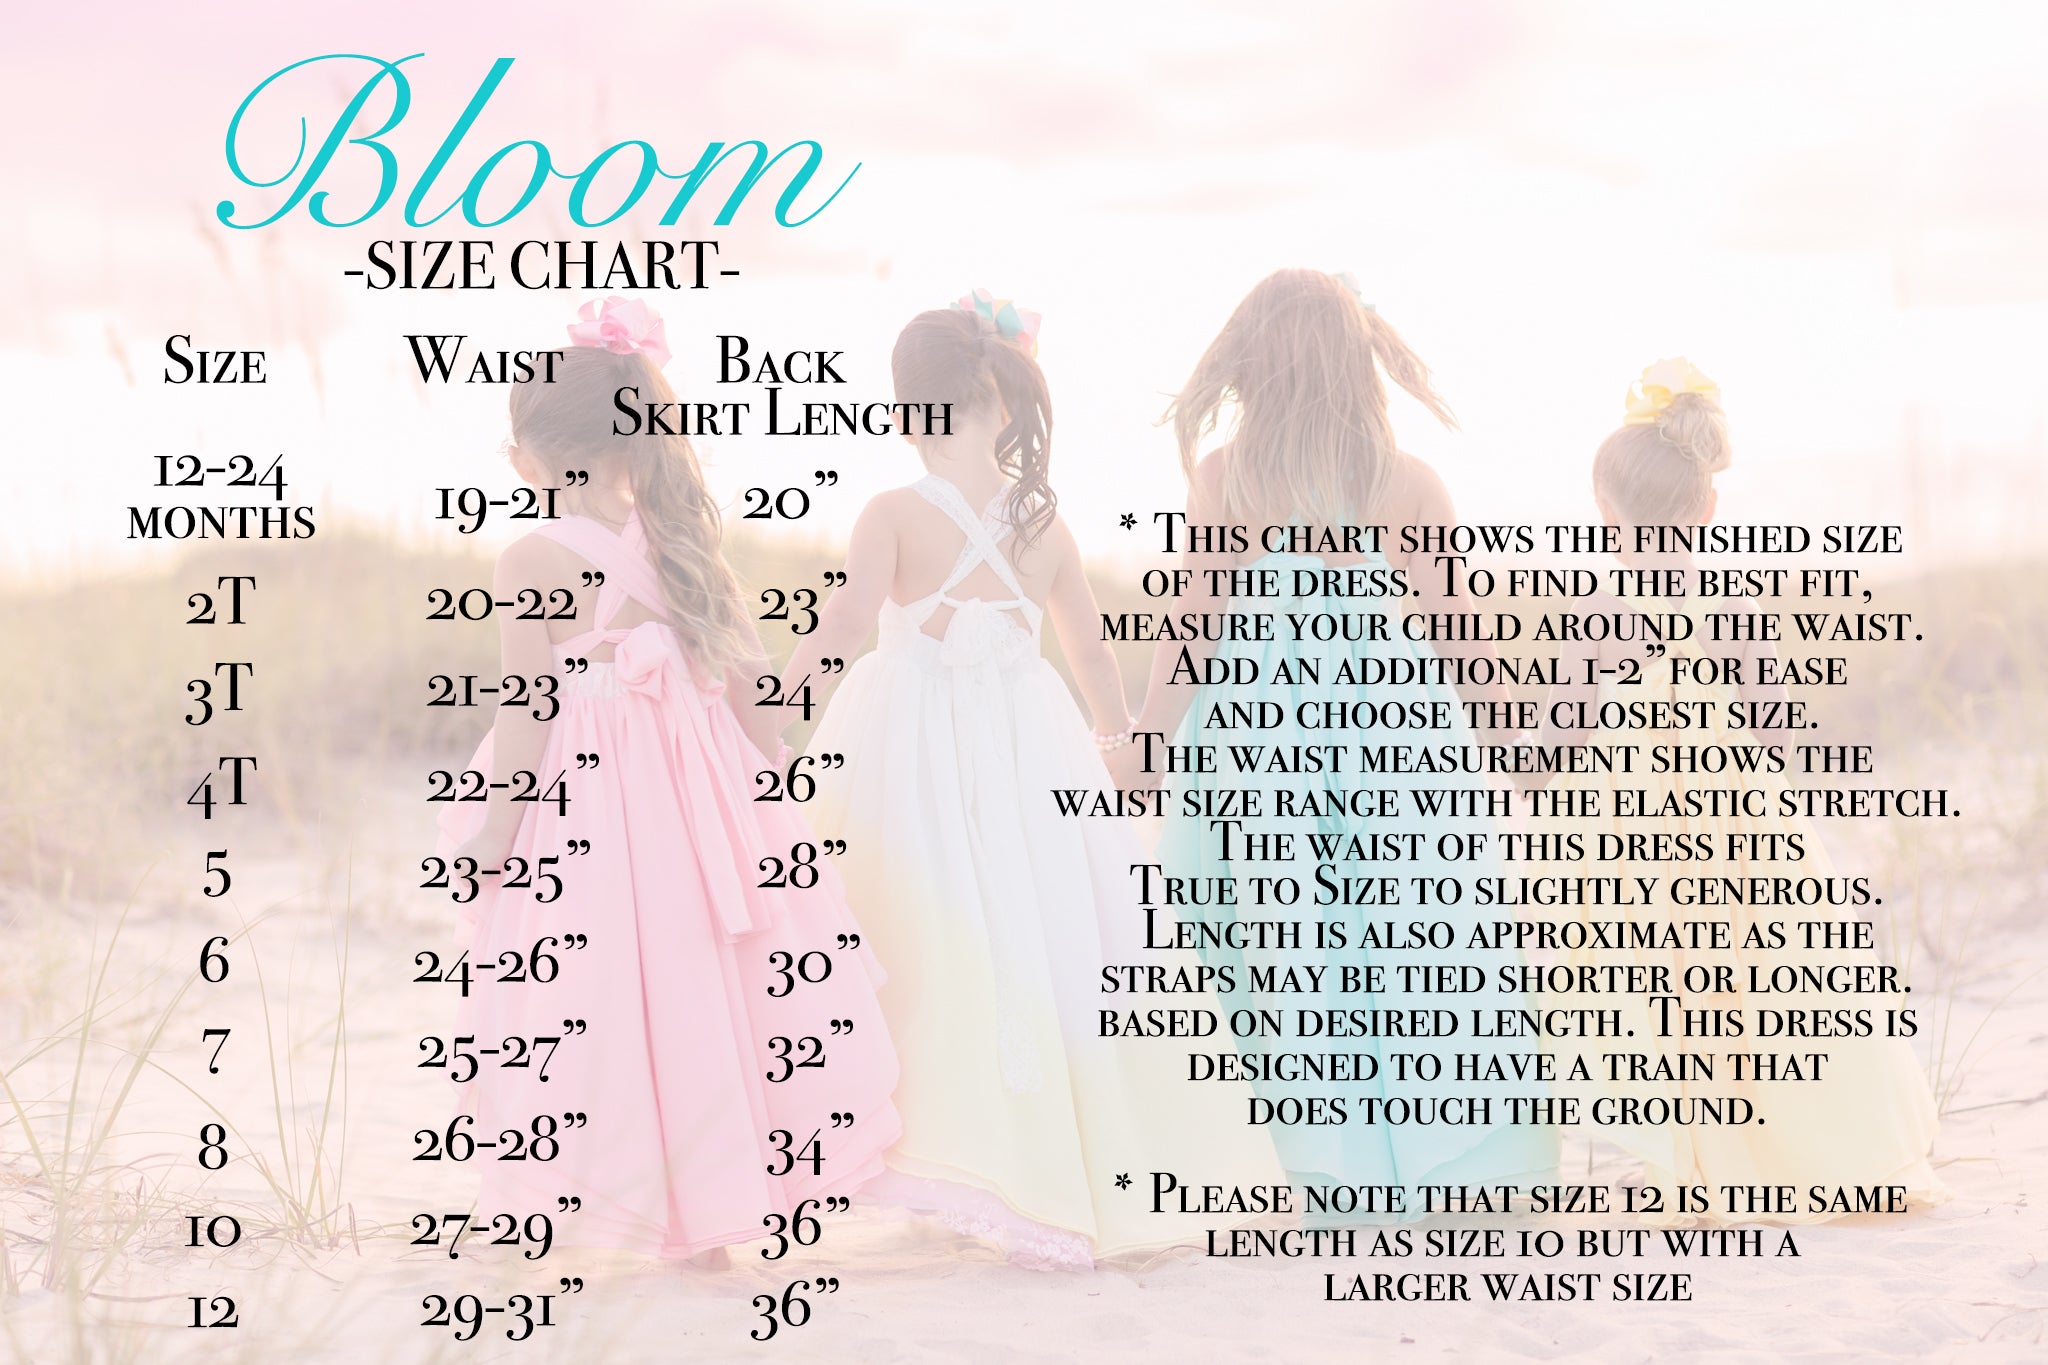 Bloom Chiffon Dresses